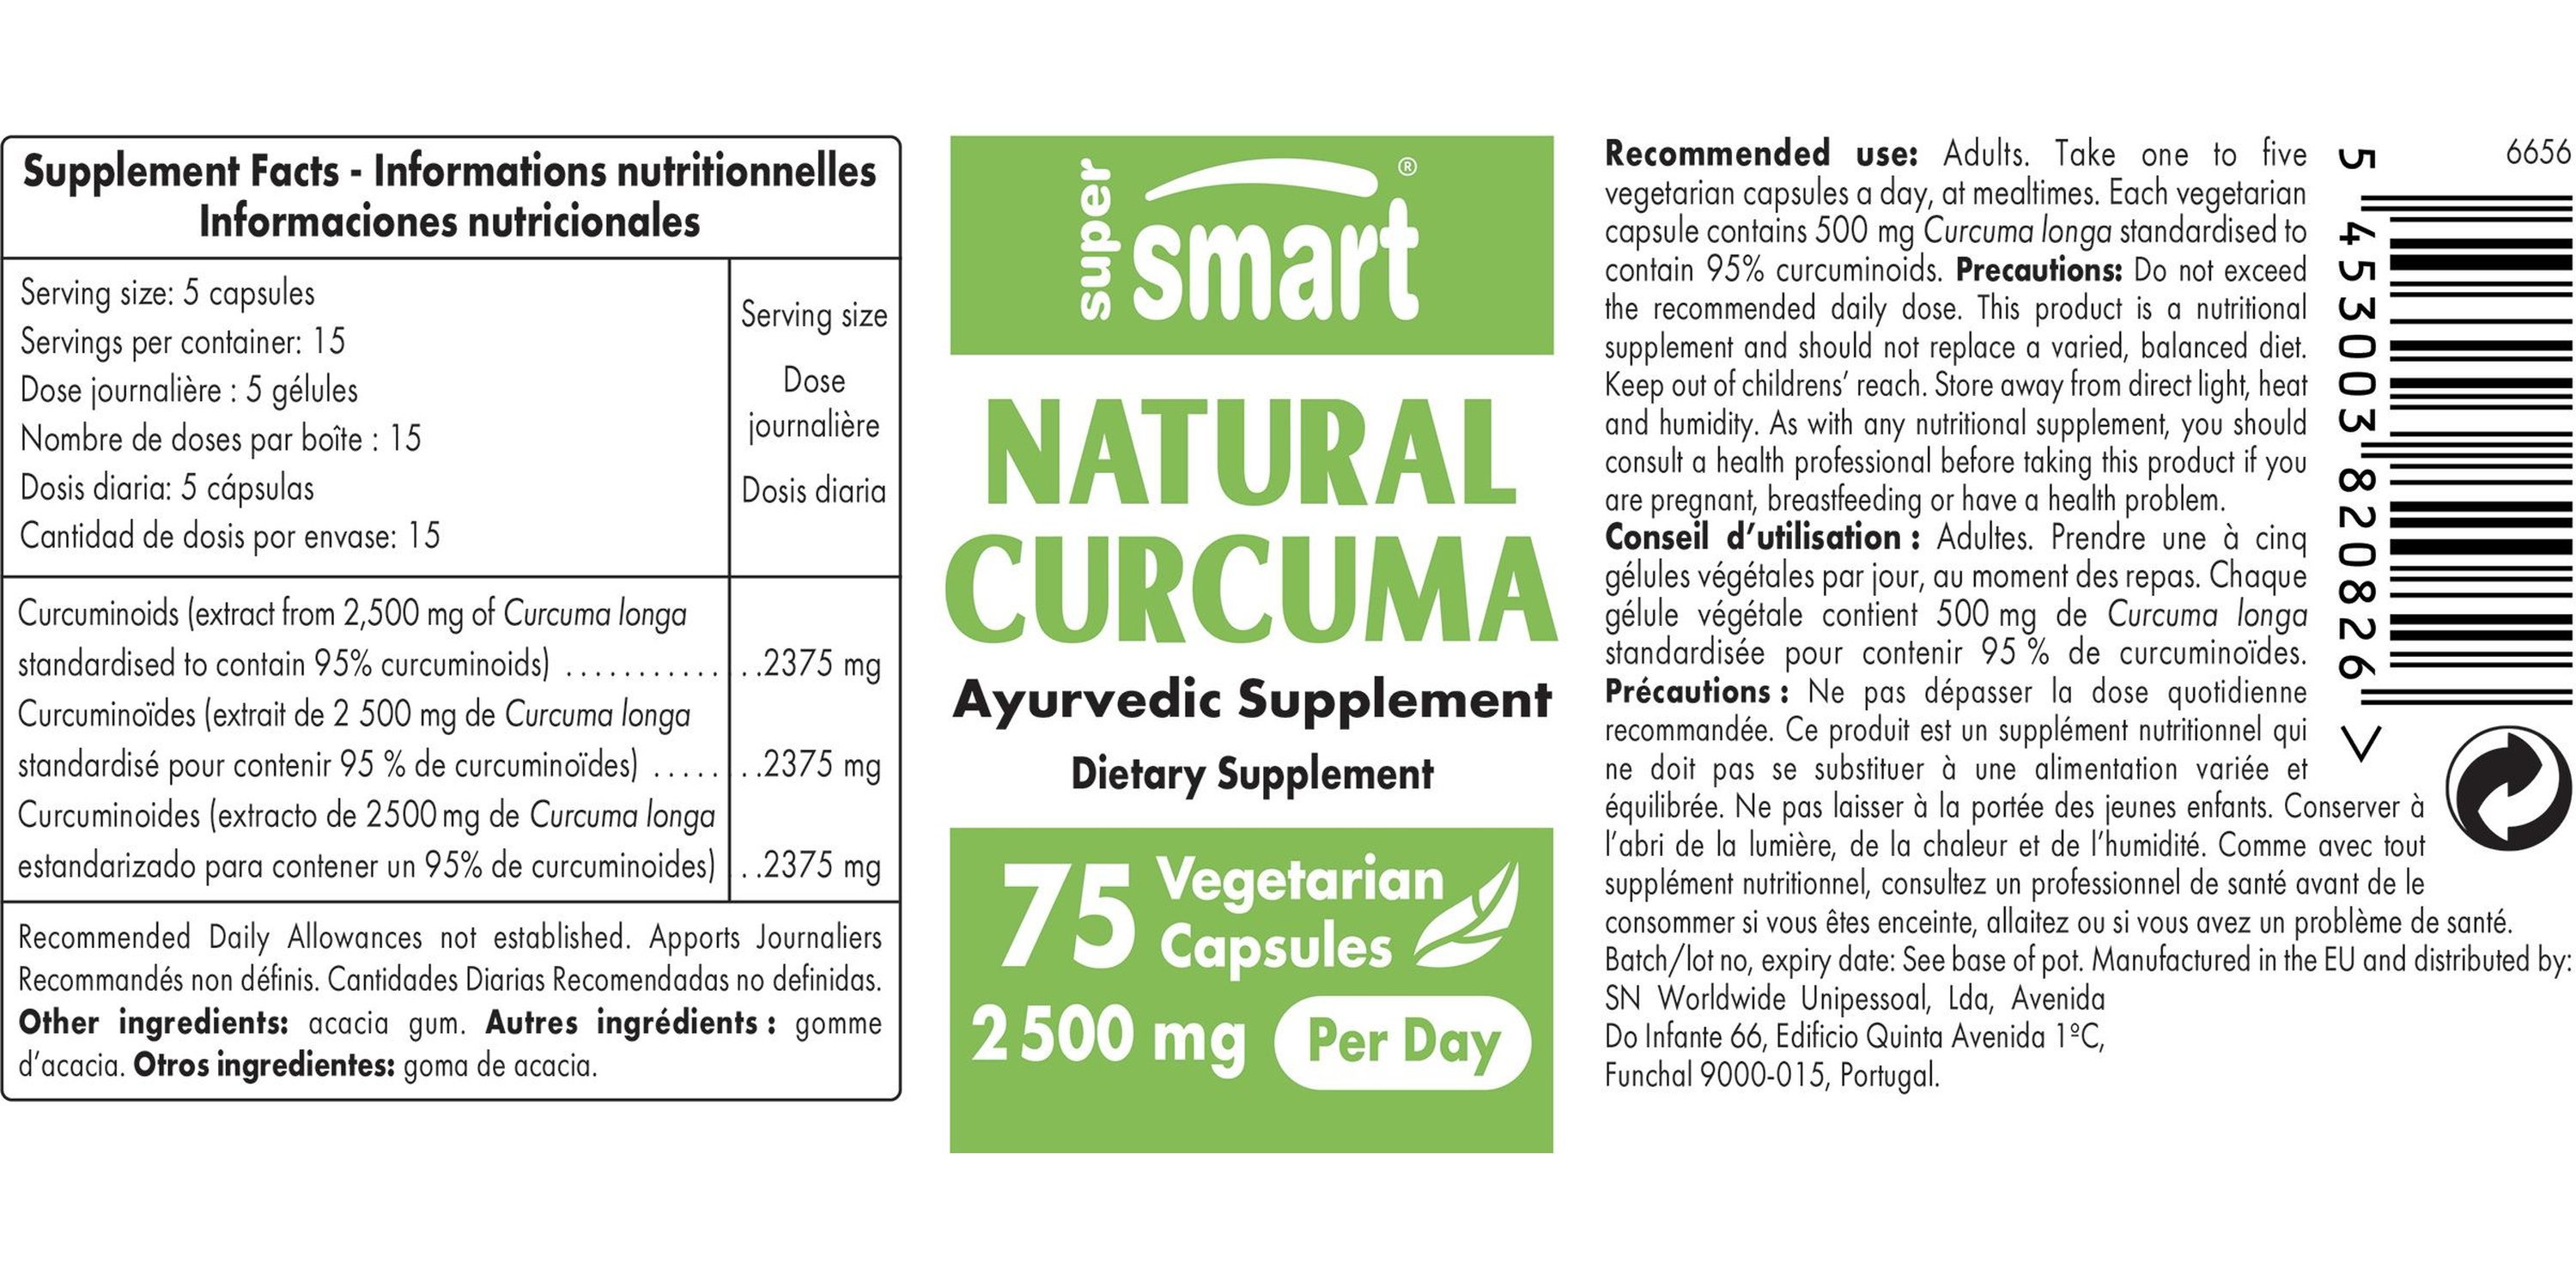 Natural Curcuma